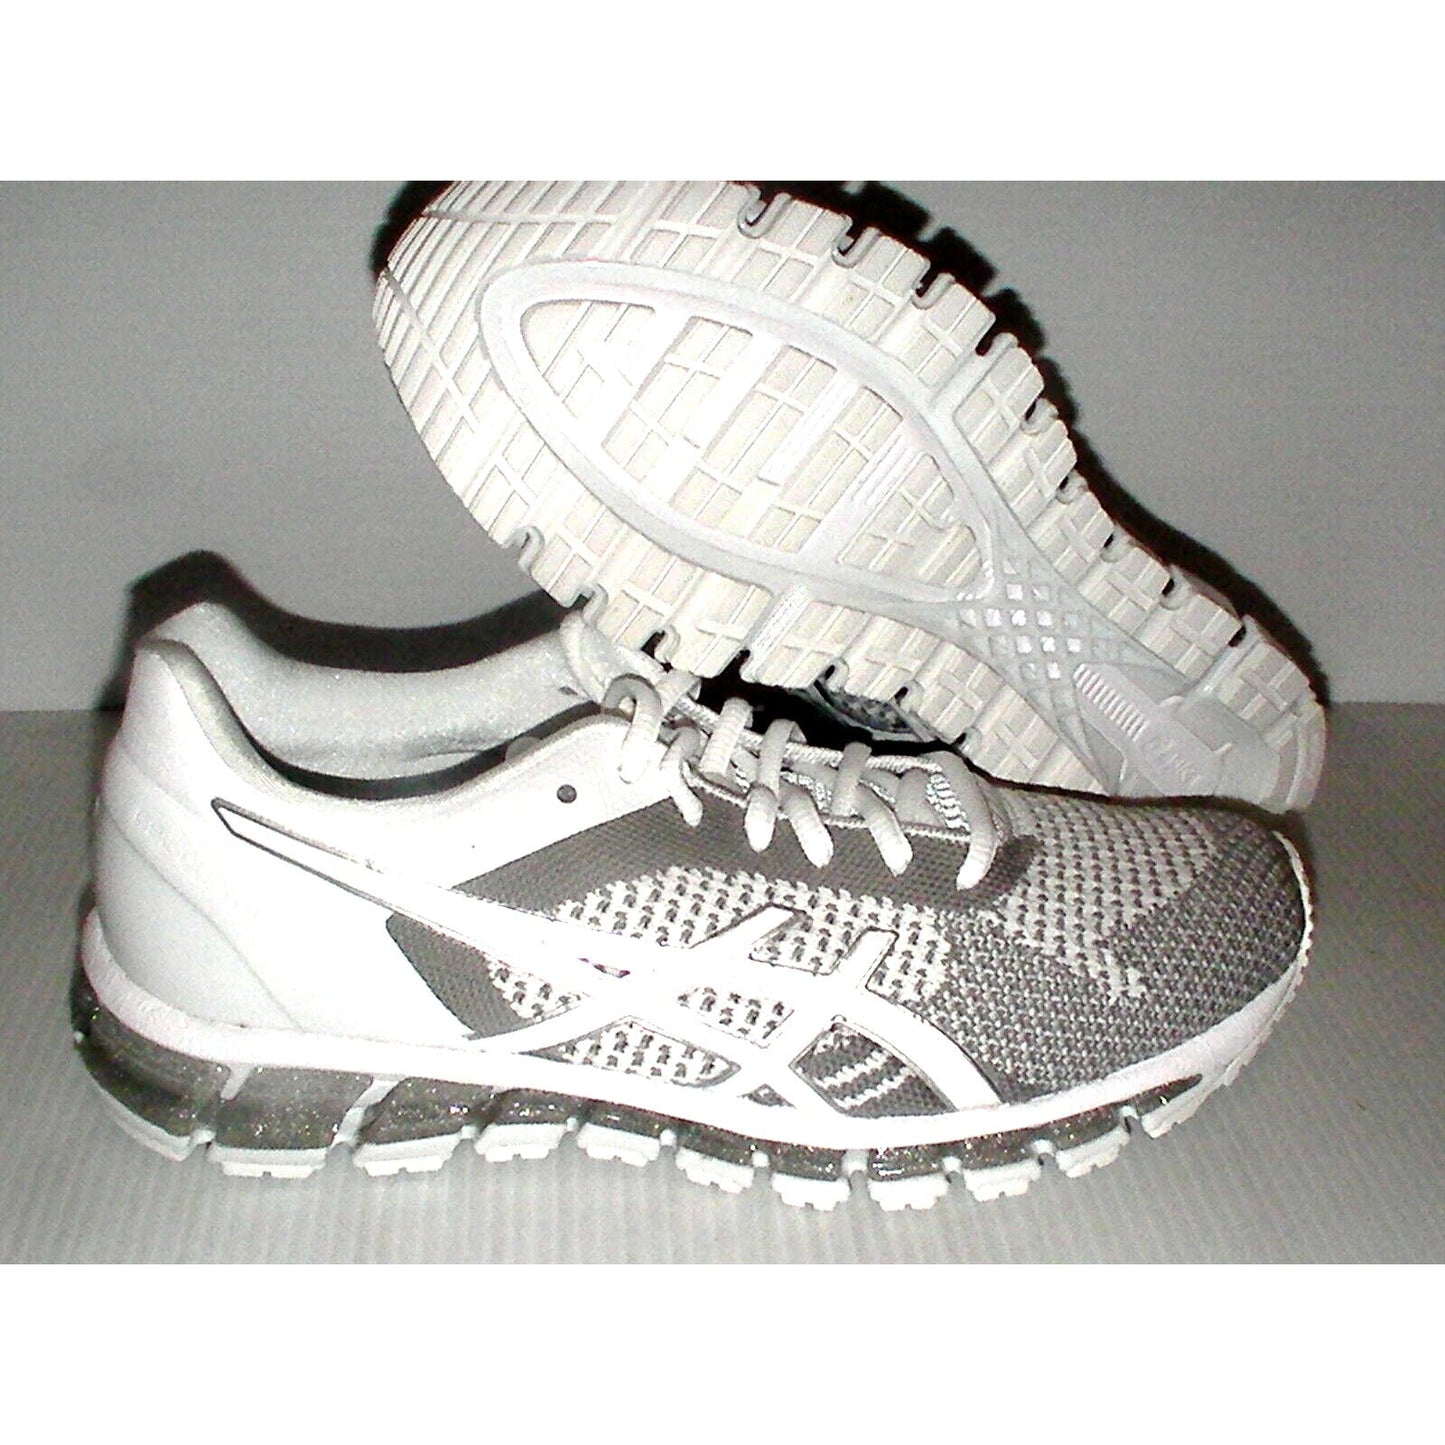 Asics women's running shoes gel quantum 360 knit white snow silver size 9 us - Classic Fashion Deals